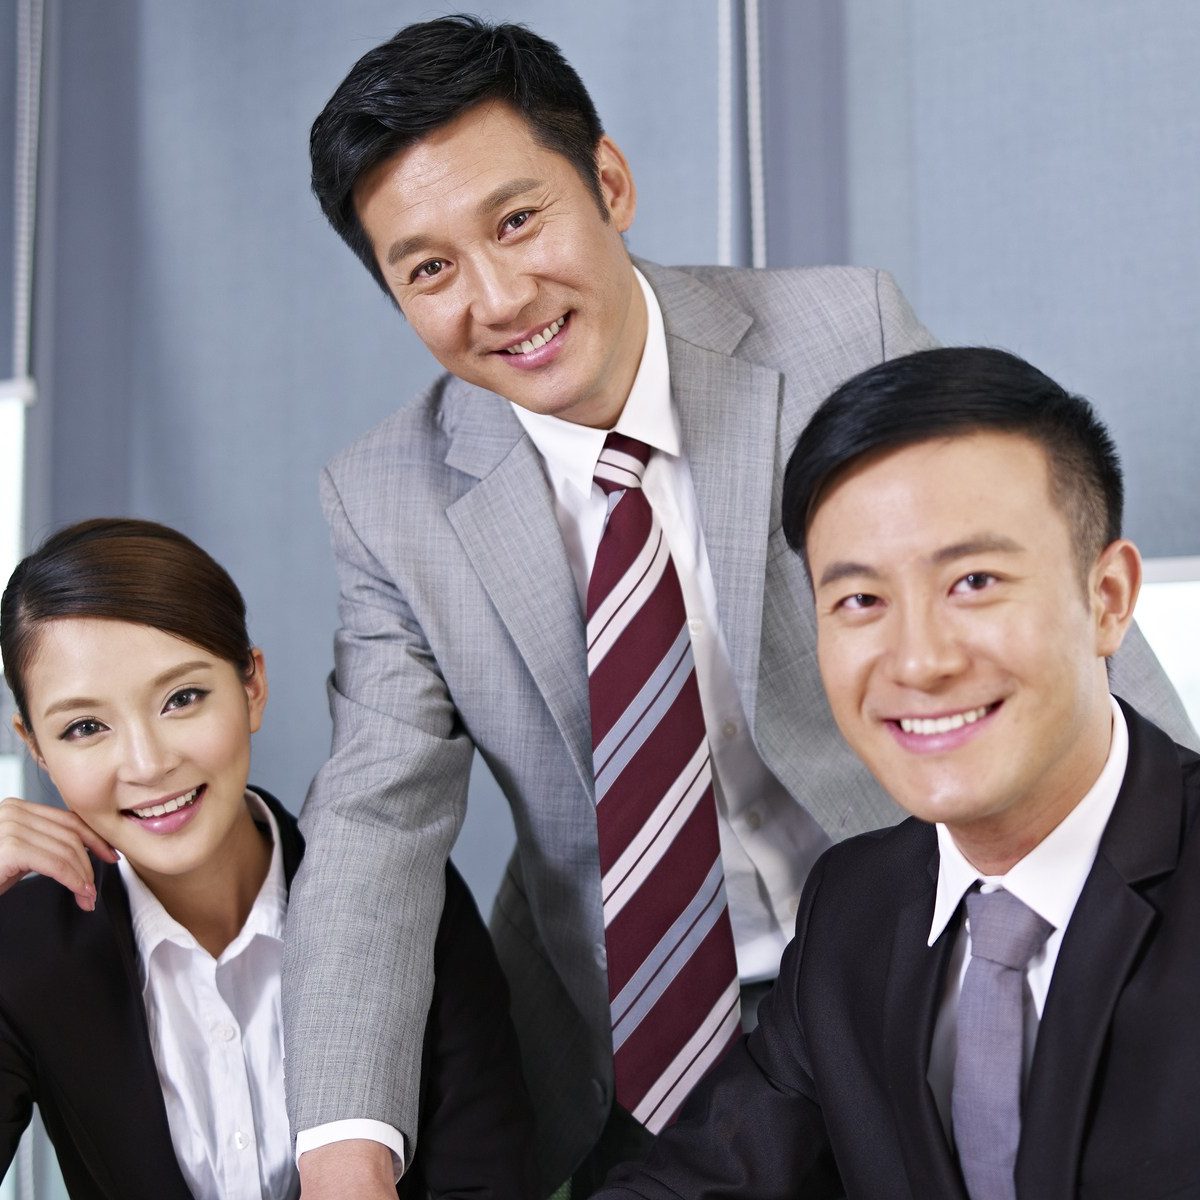 Caproasia.com | Leading Financial Platform in Asia